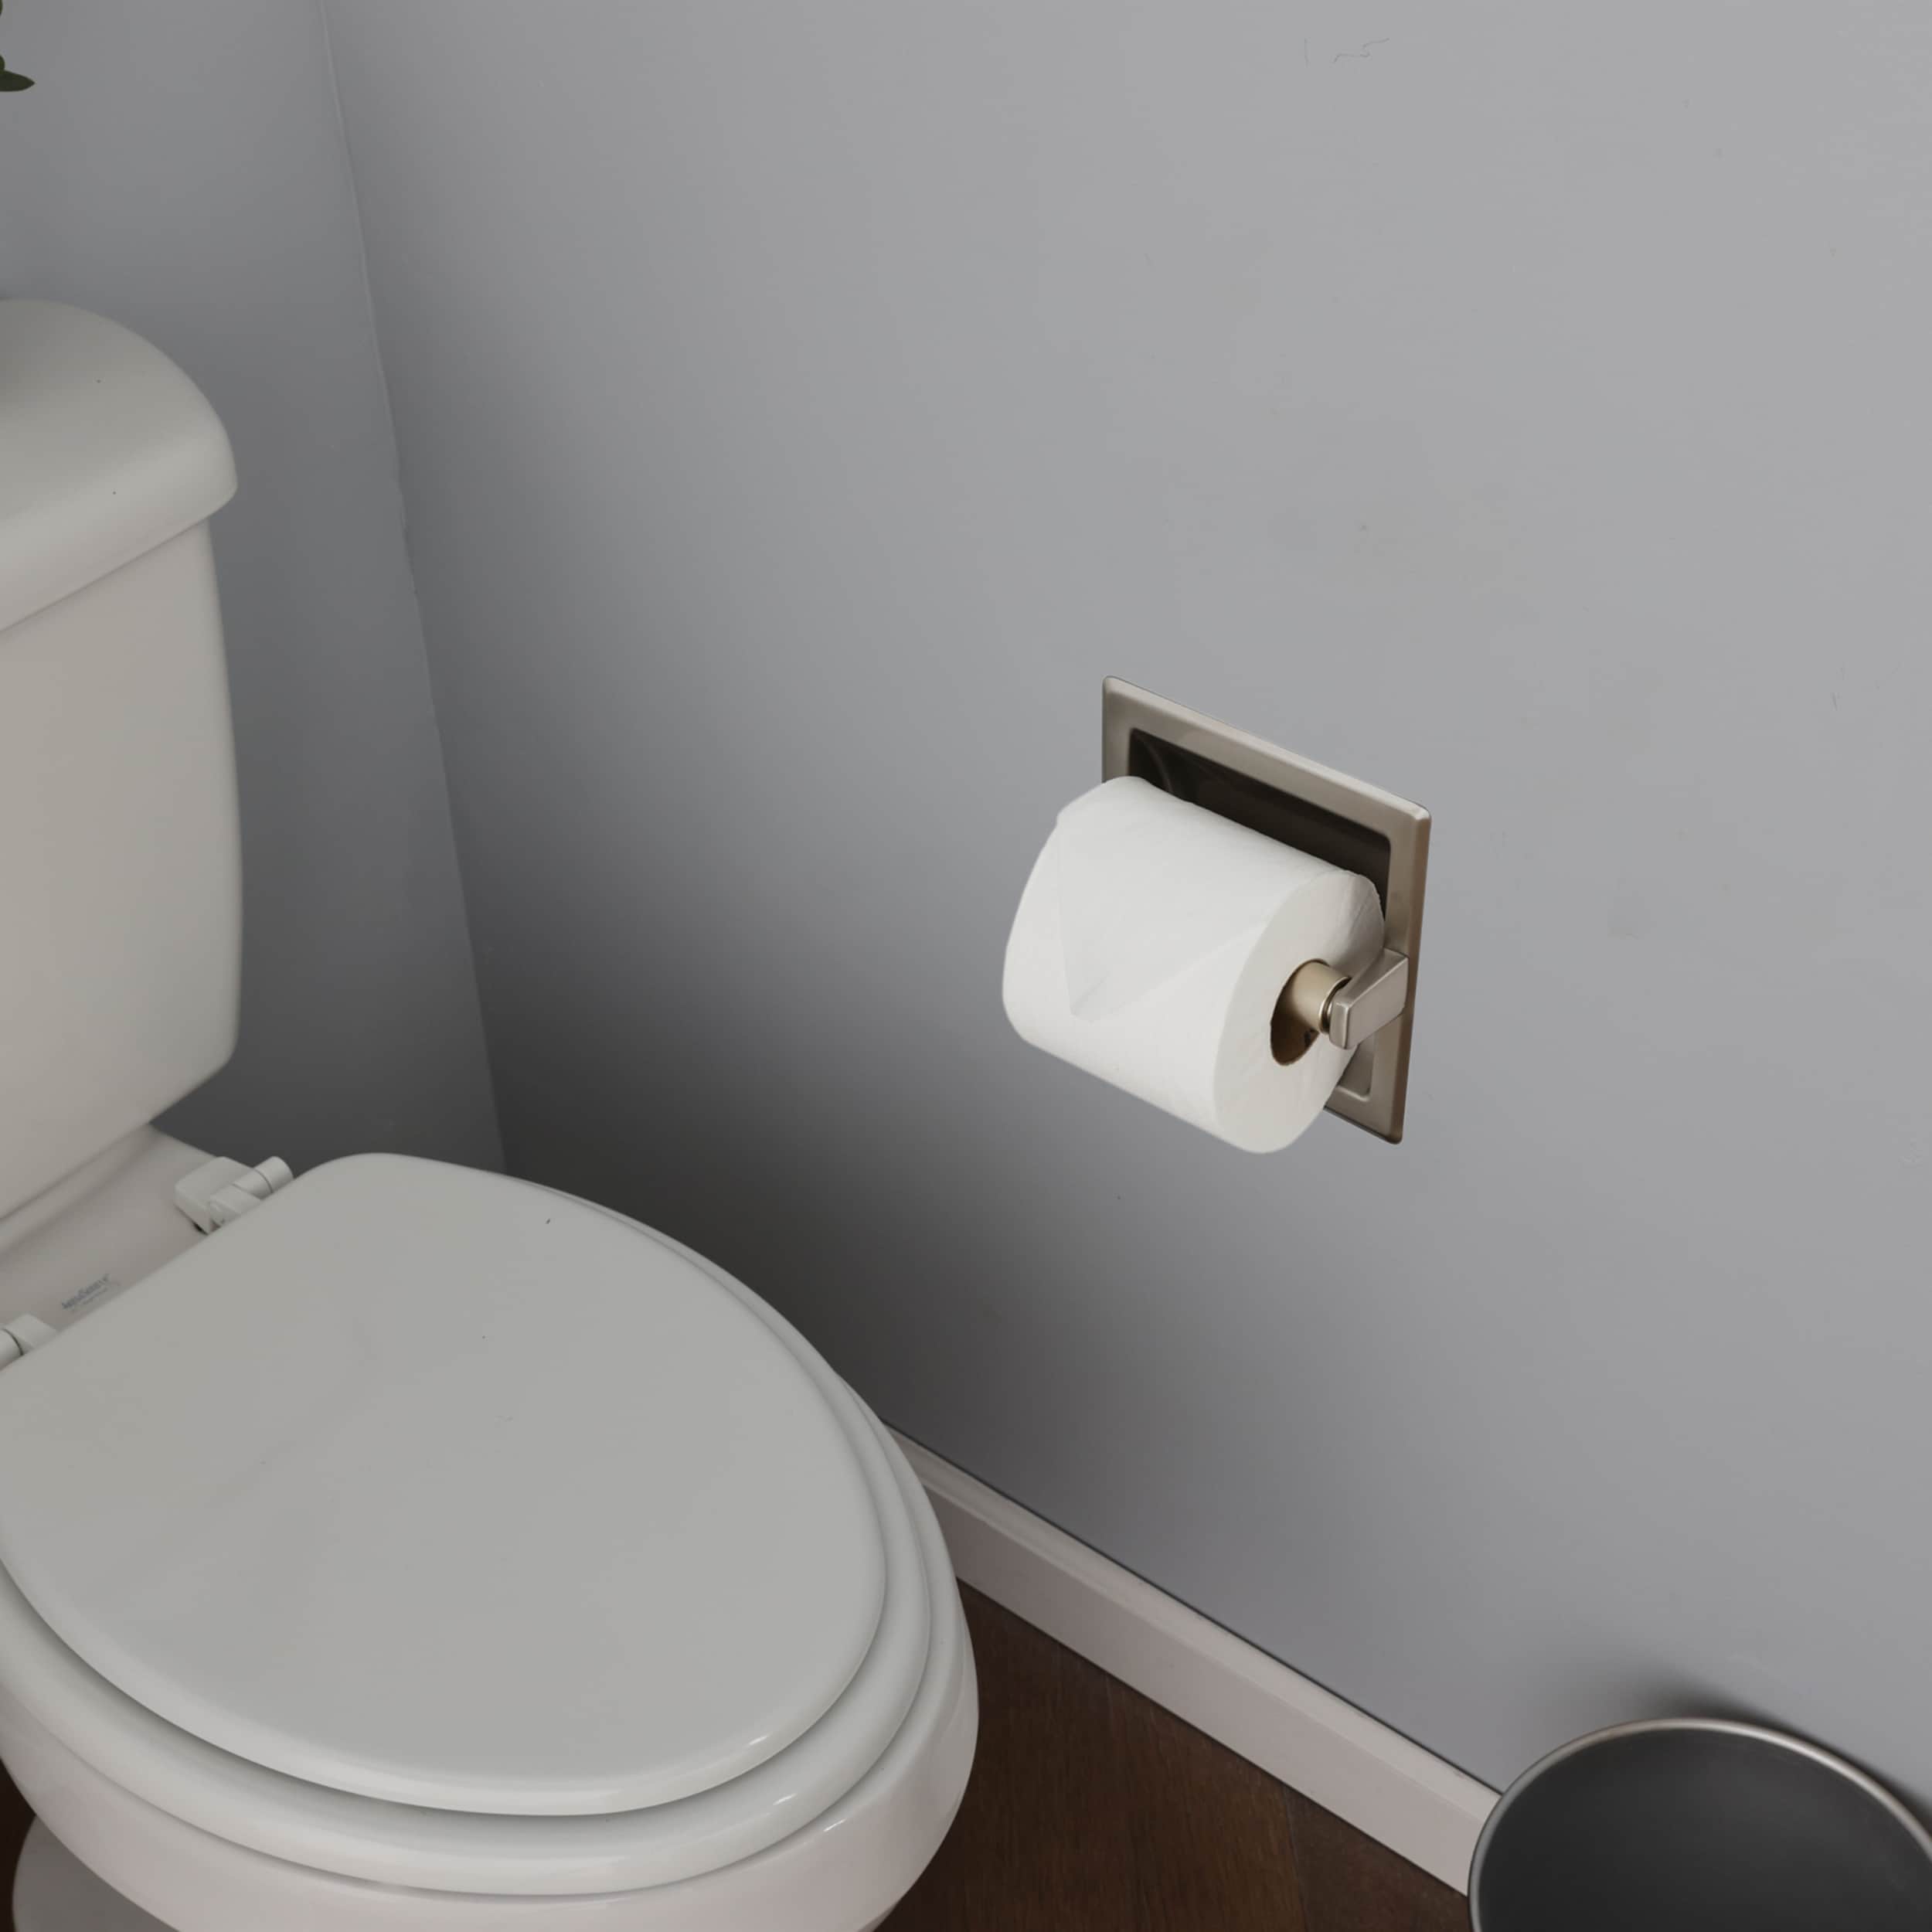 ARISTA Brushed Nickel Recessed Spring-loaded Toilet Paper Holder